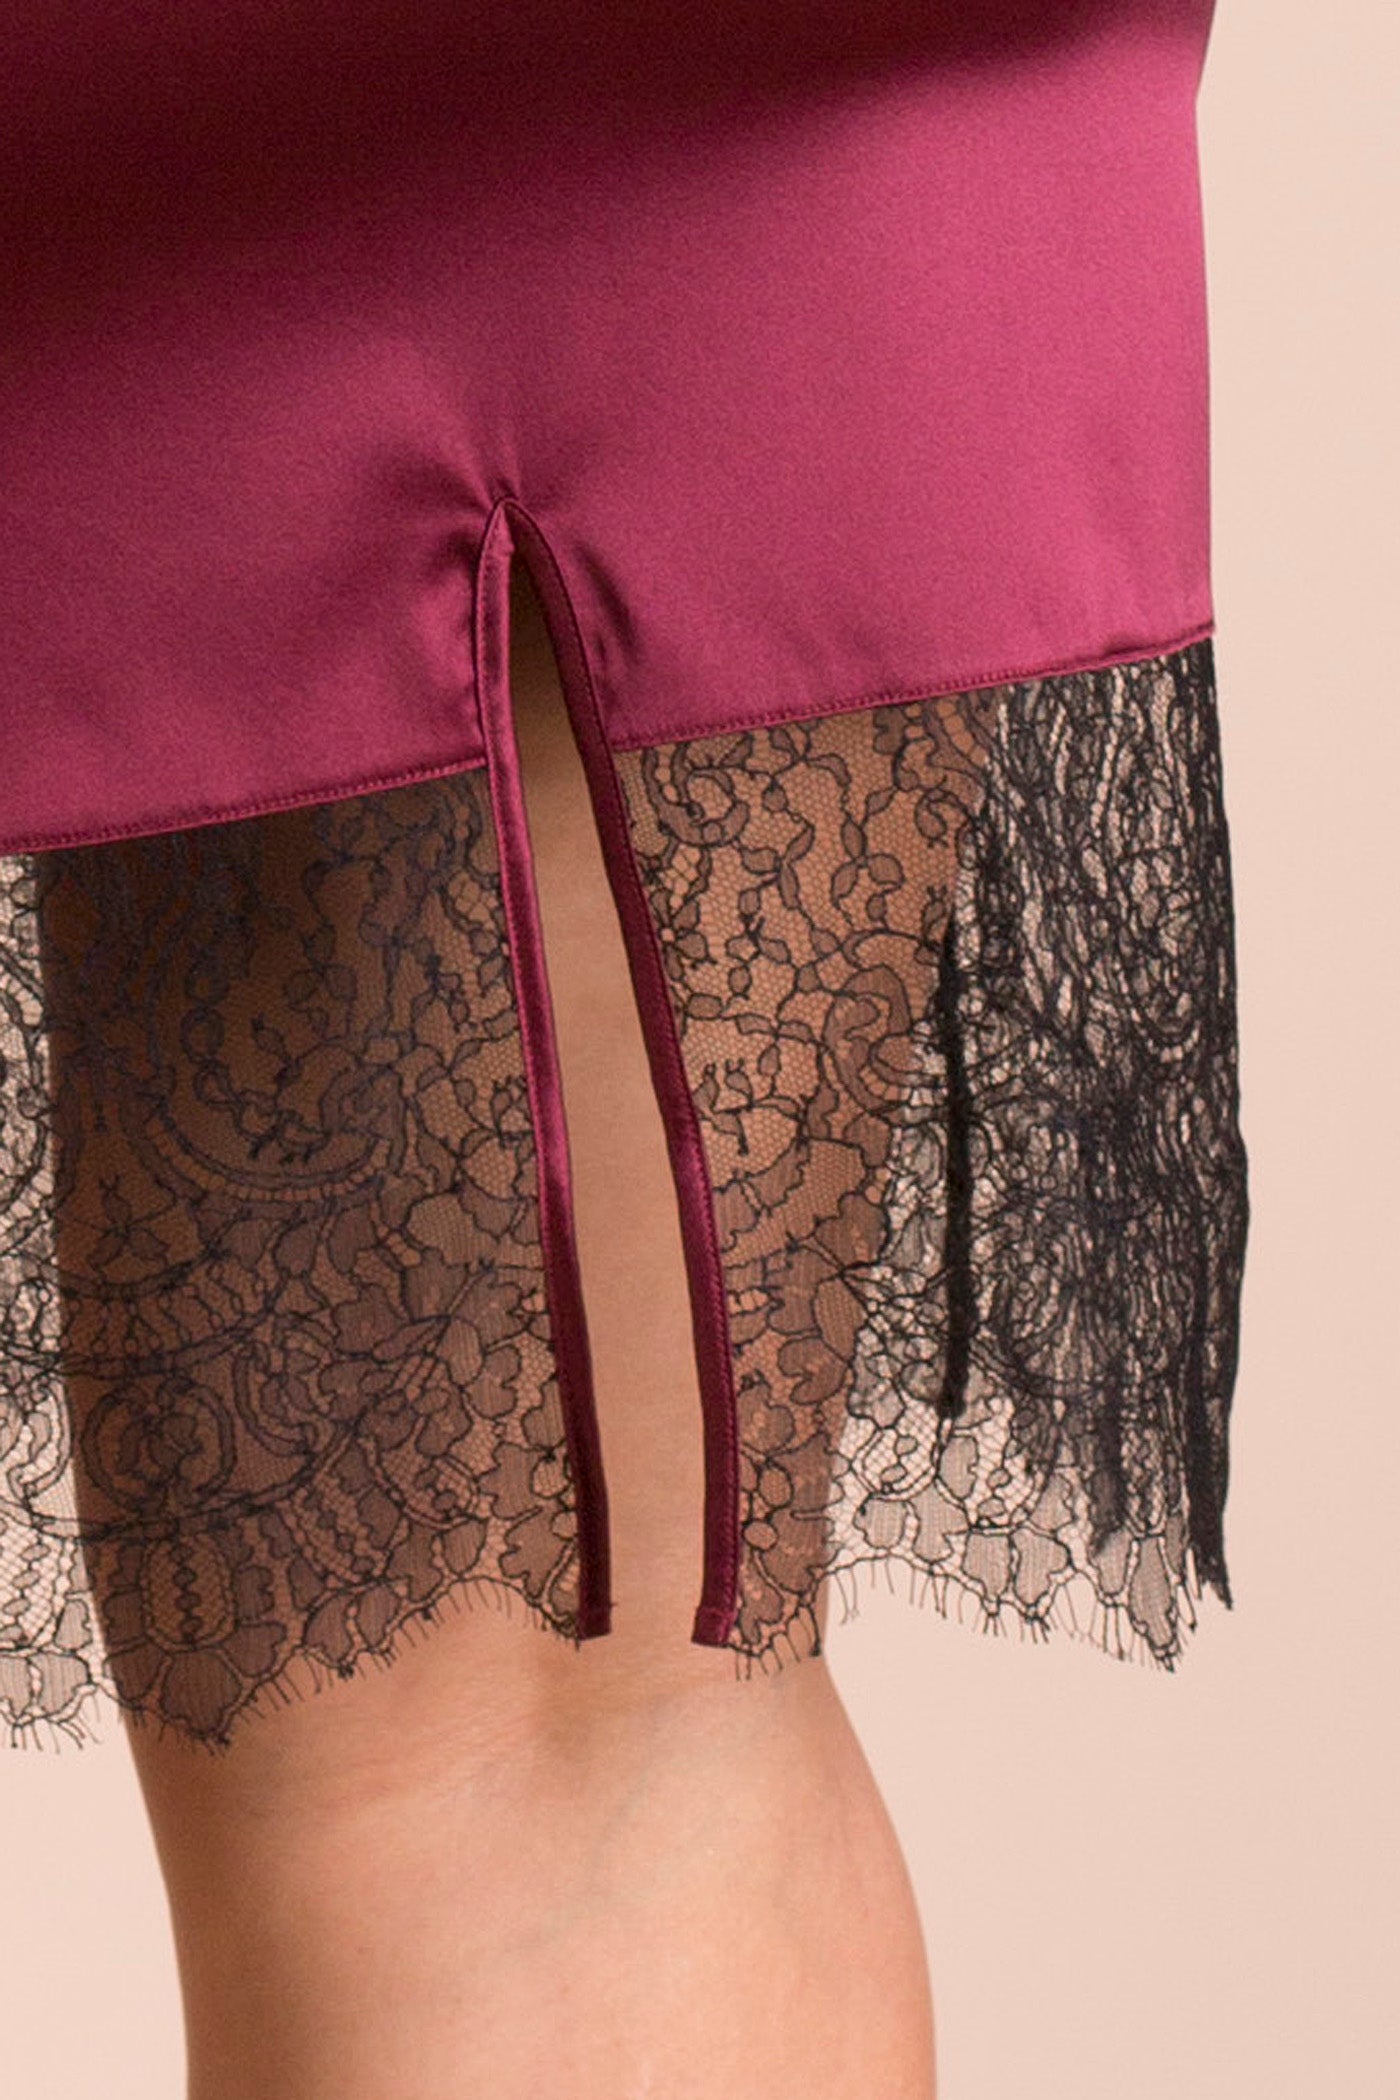 Lace detail on Eleanor Damson silk half slip, with silk binding on back split